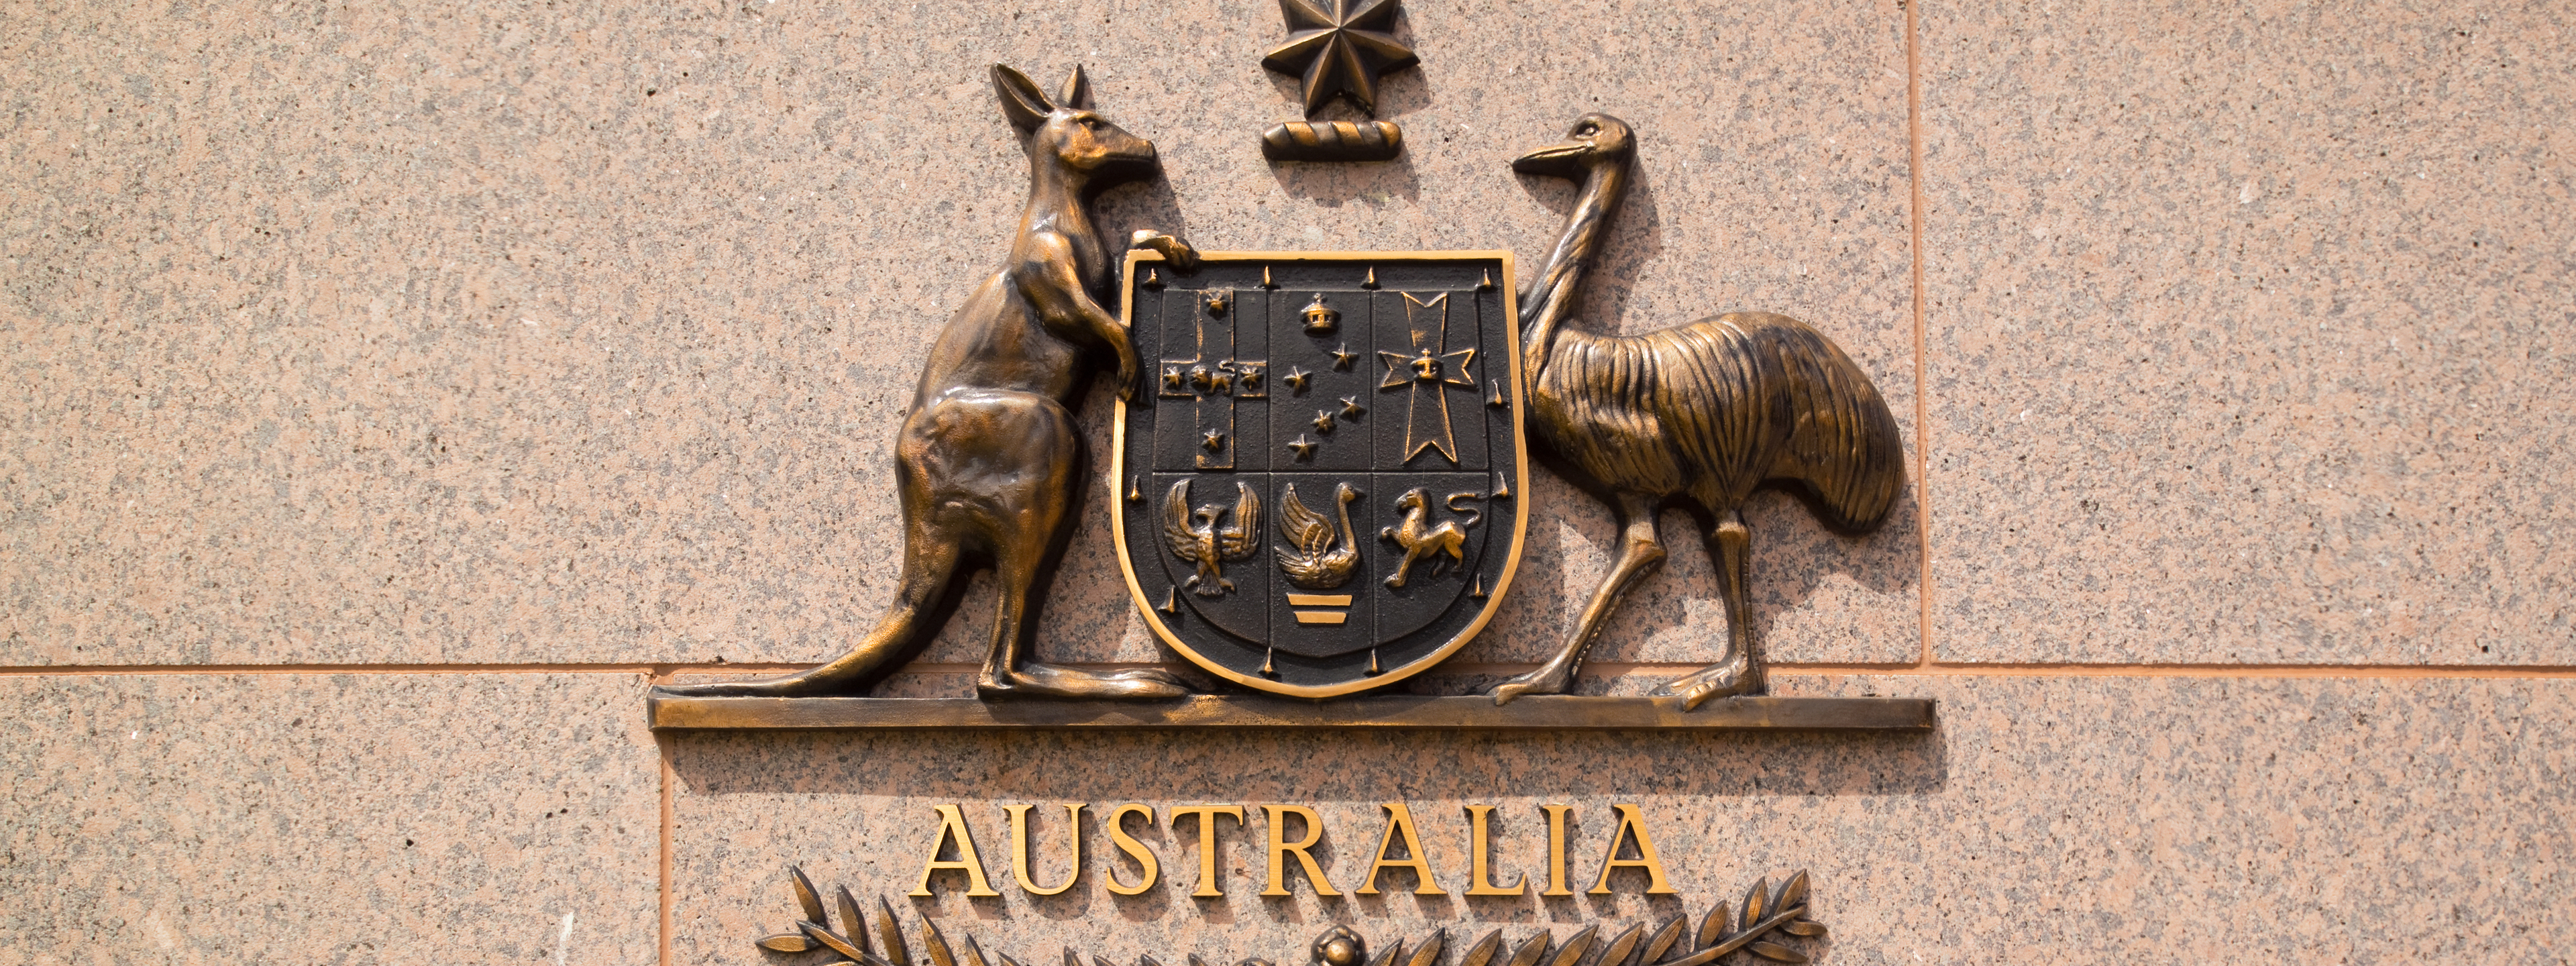 Monument sign on The Treasury, Australia